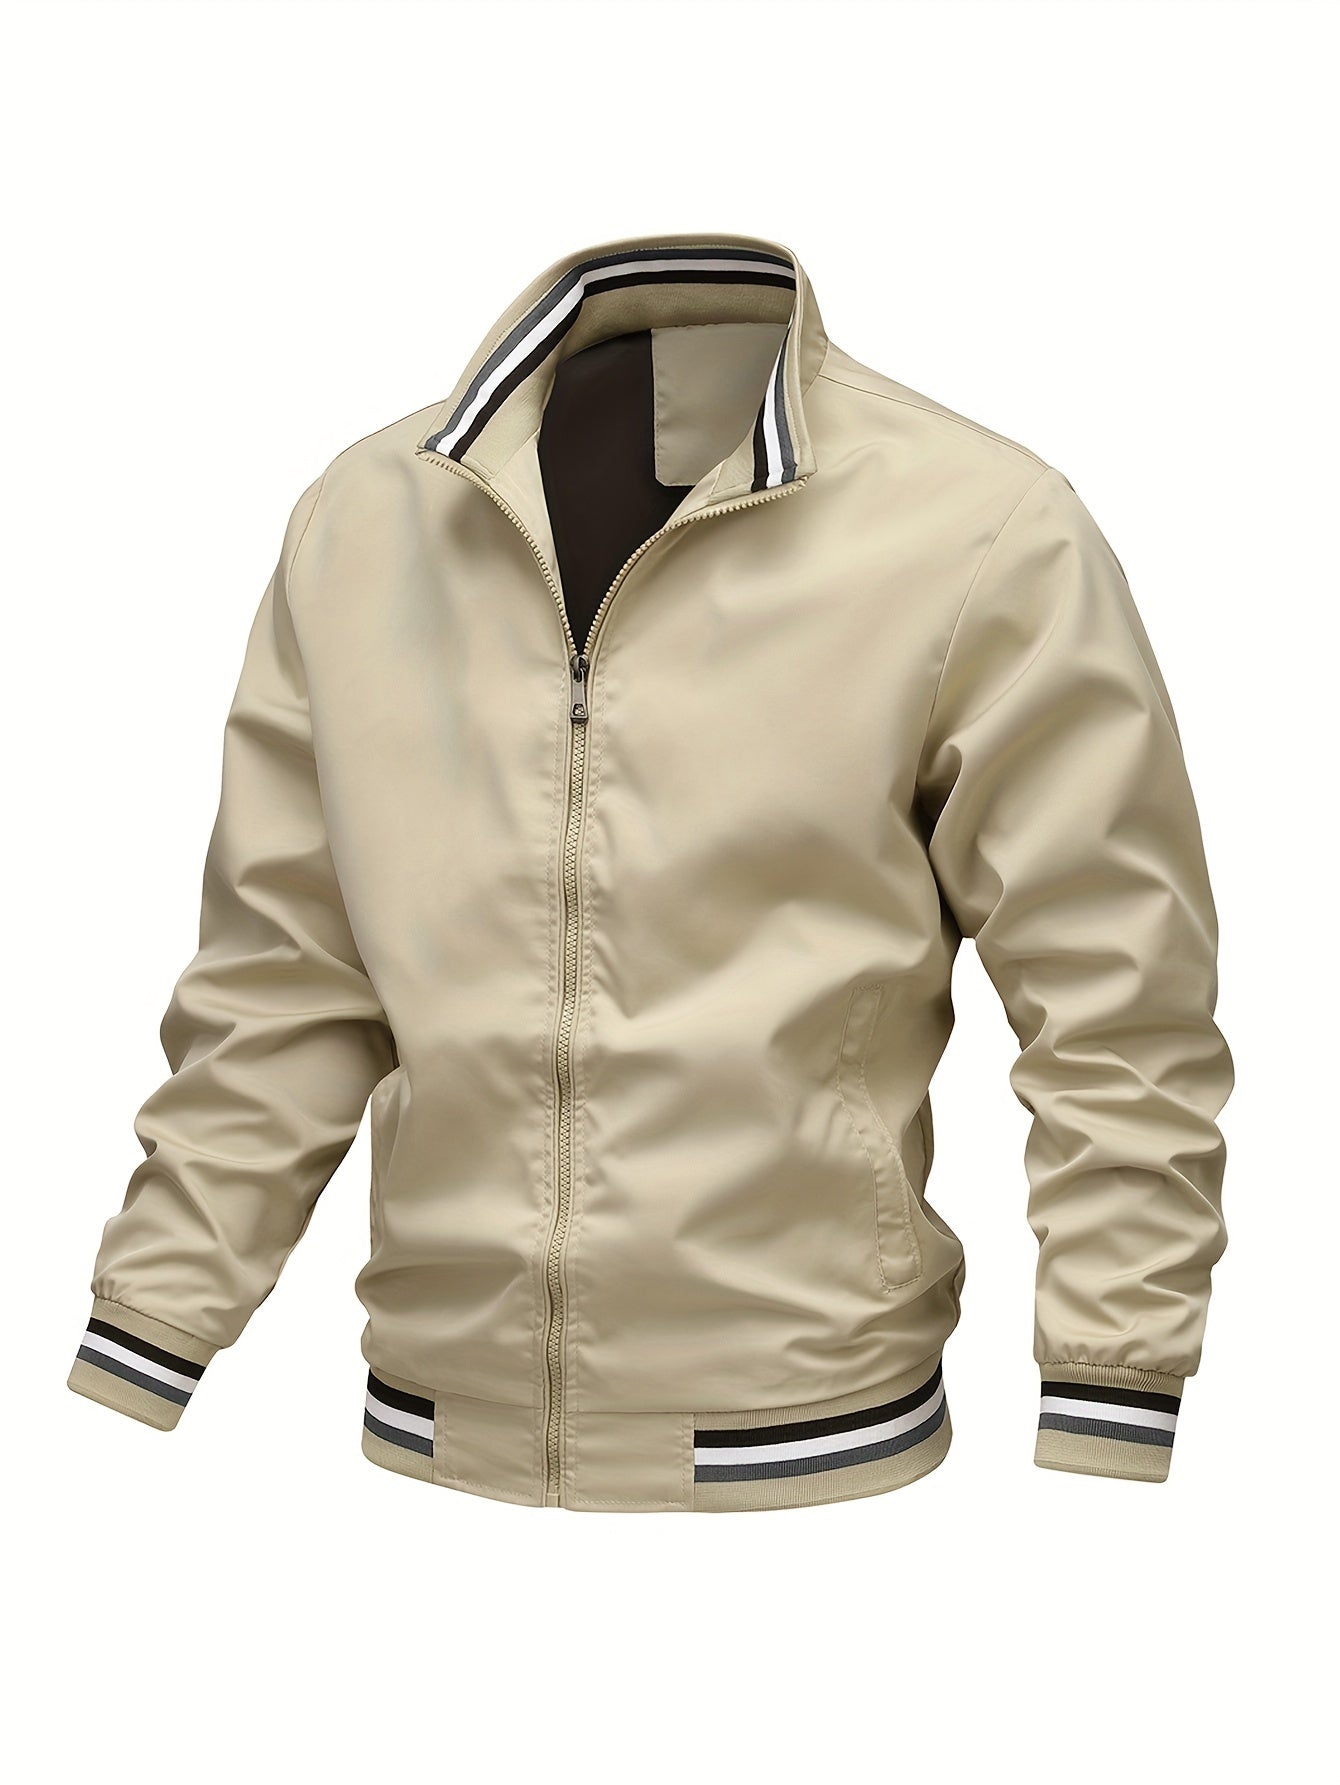 Foruwish - Stripe Edge Bomber Jacket, Men's Casual Stand Collar Zip Up Jacket For Spring Summer Outdoor